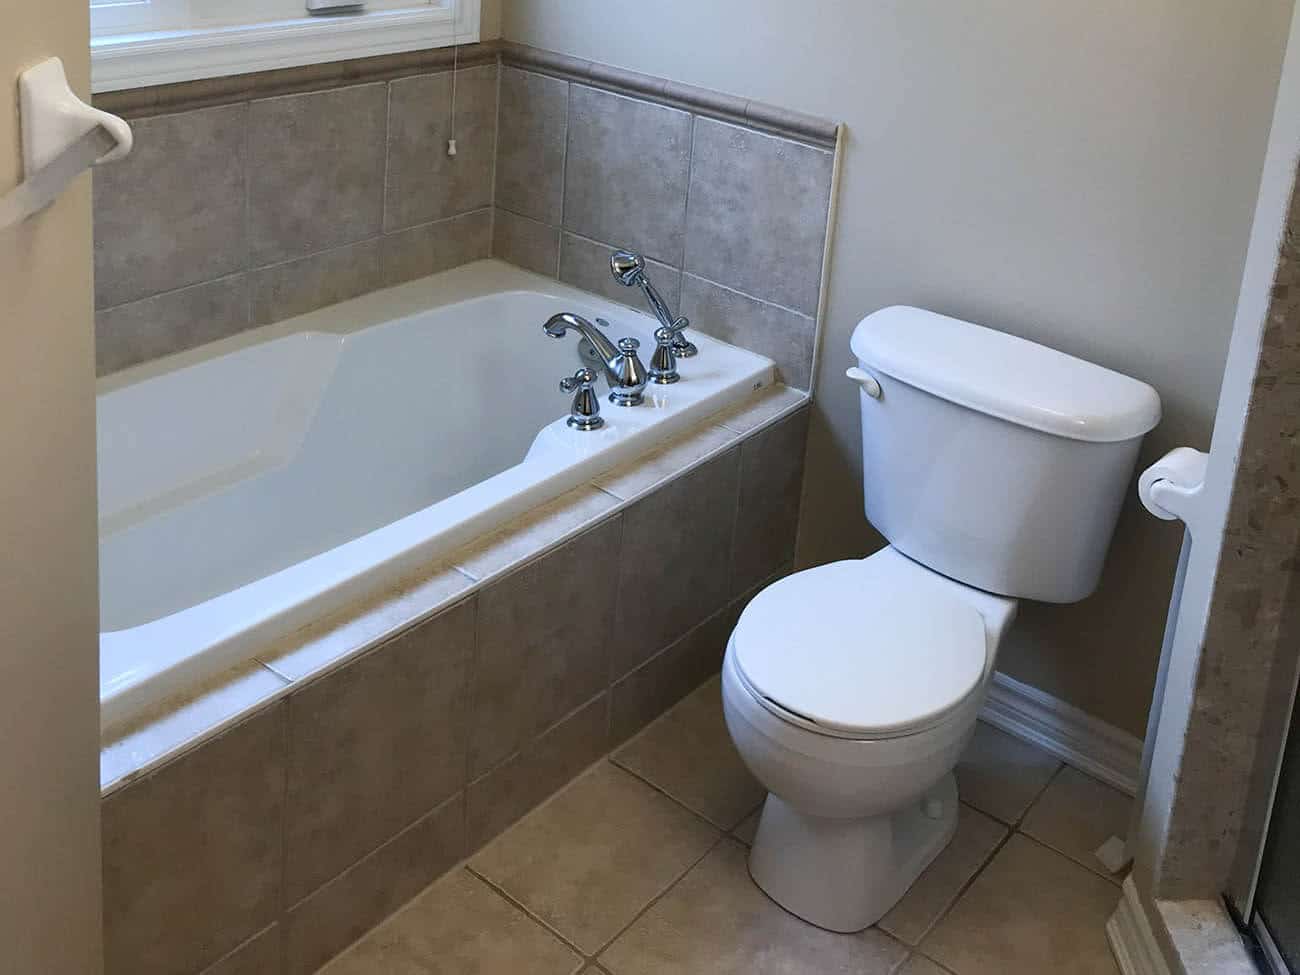 https://mtdrain.com/wp-content/uploads/2021/08/how-to-unclog-bathroom-tub.jpg